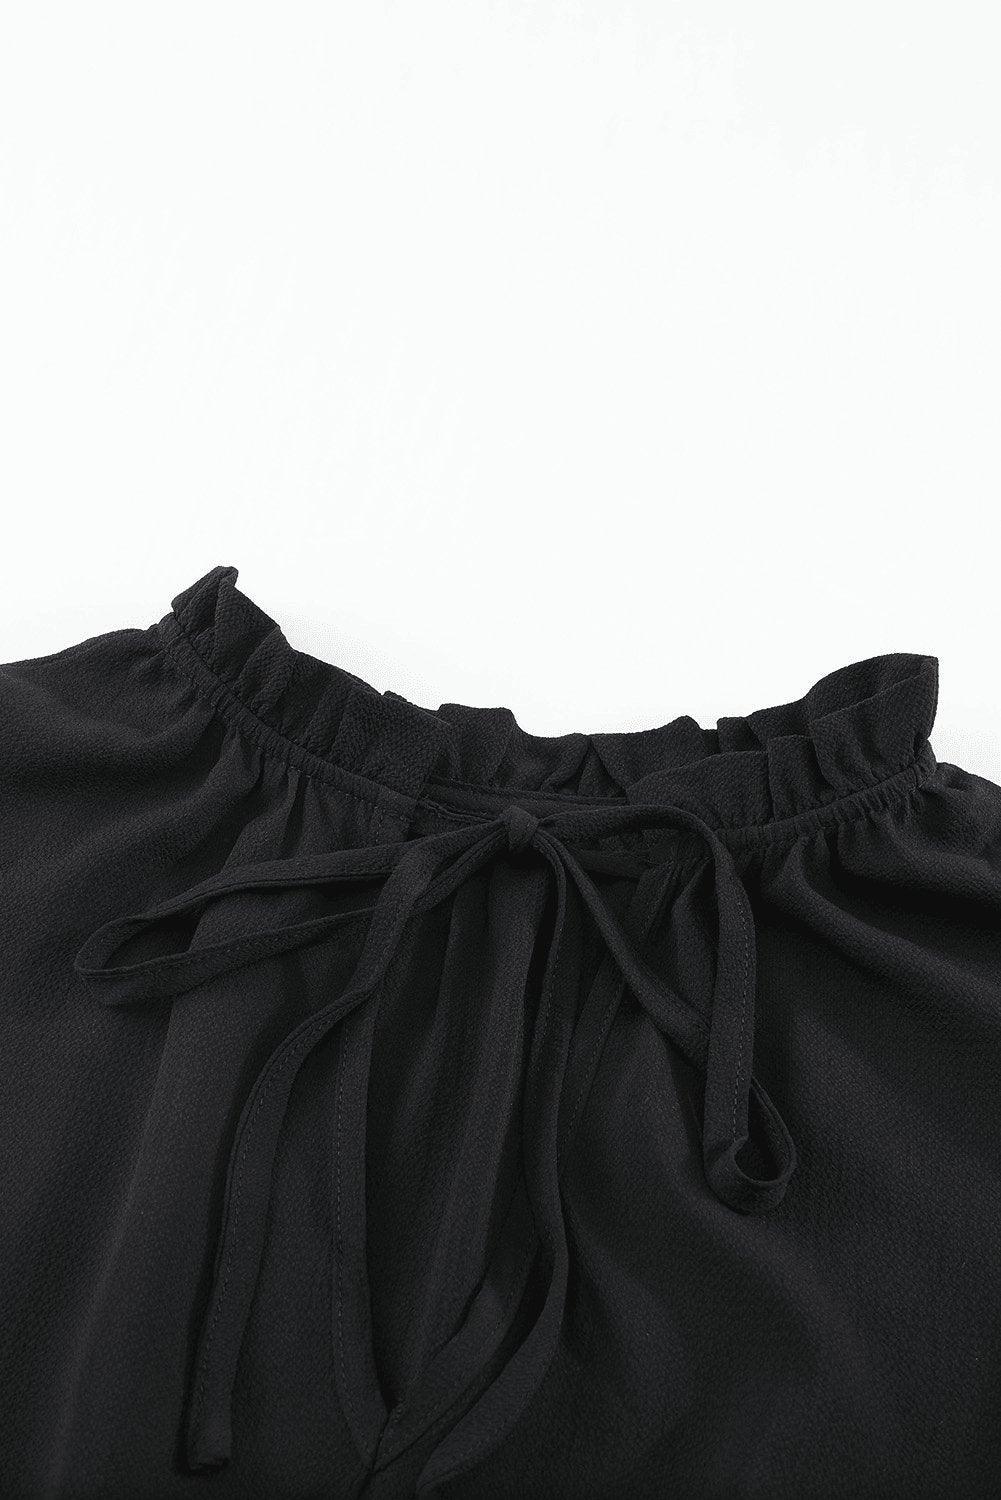 Black Sleeveless V Neck Ruffled Swing Mini Dress